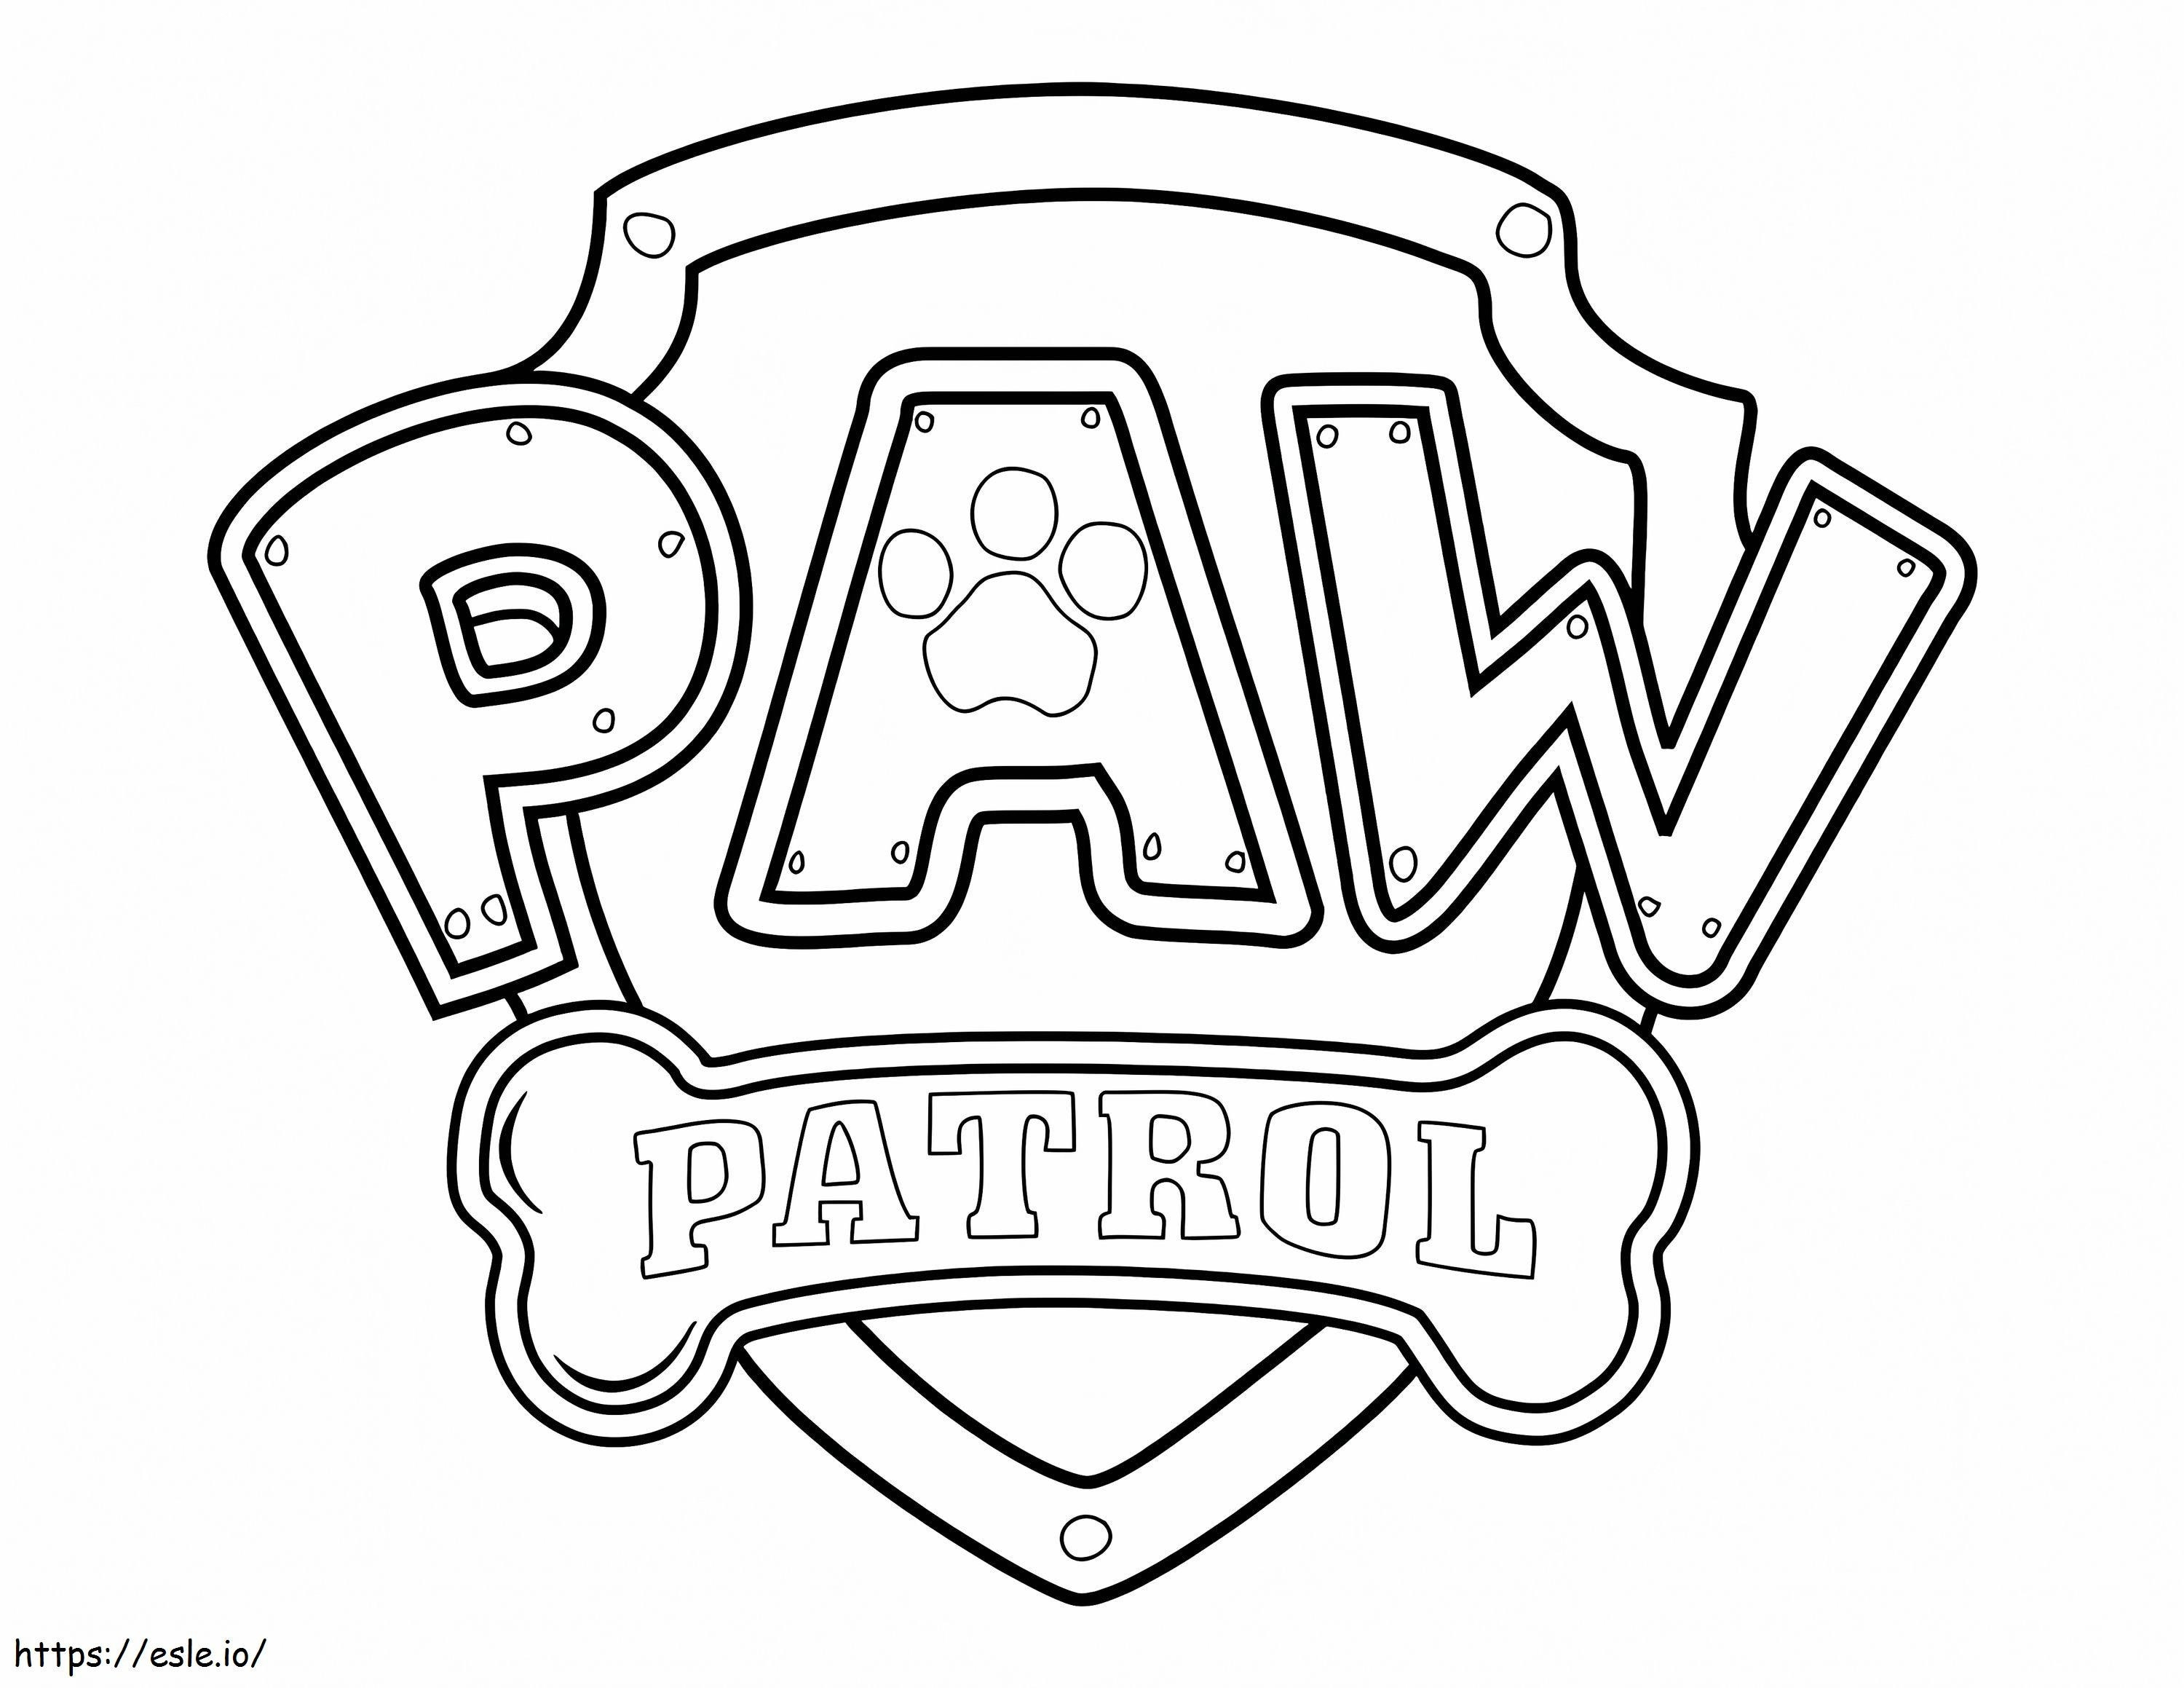 Paw Patrol 1 värityskuva